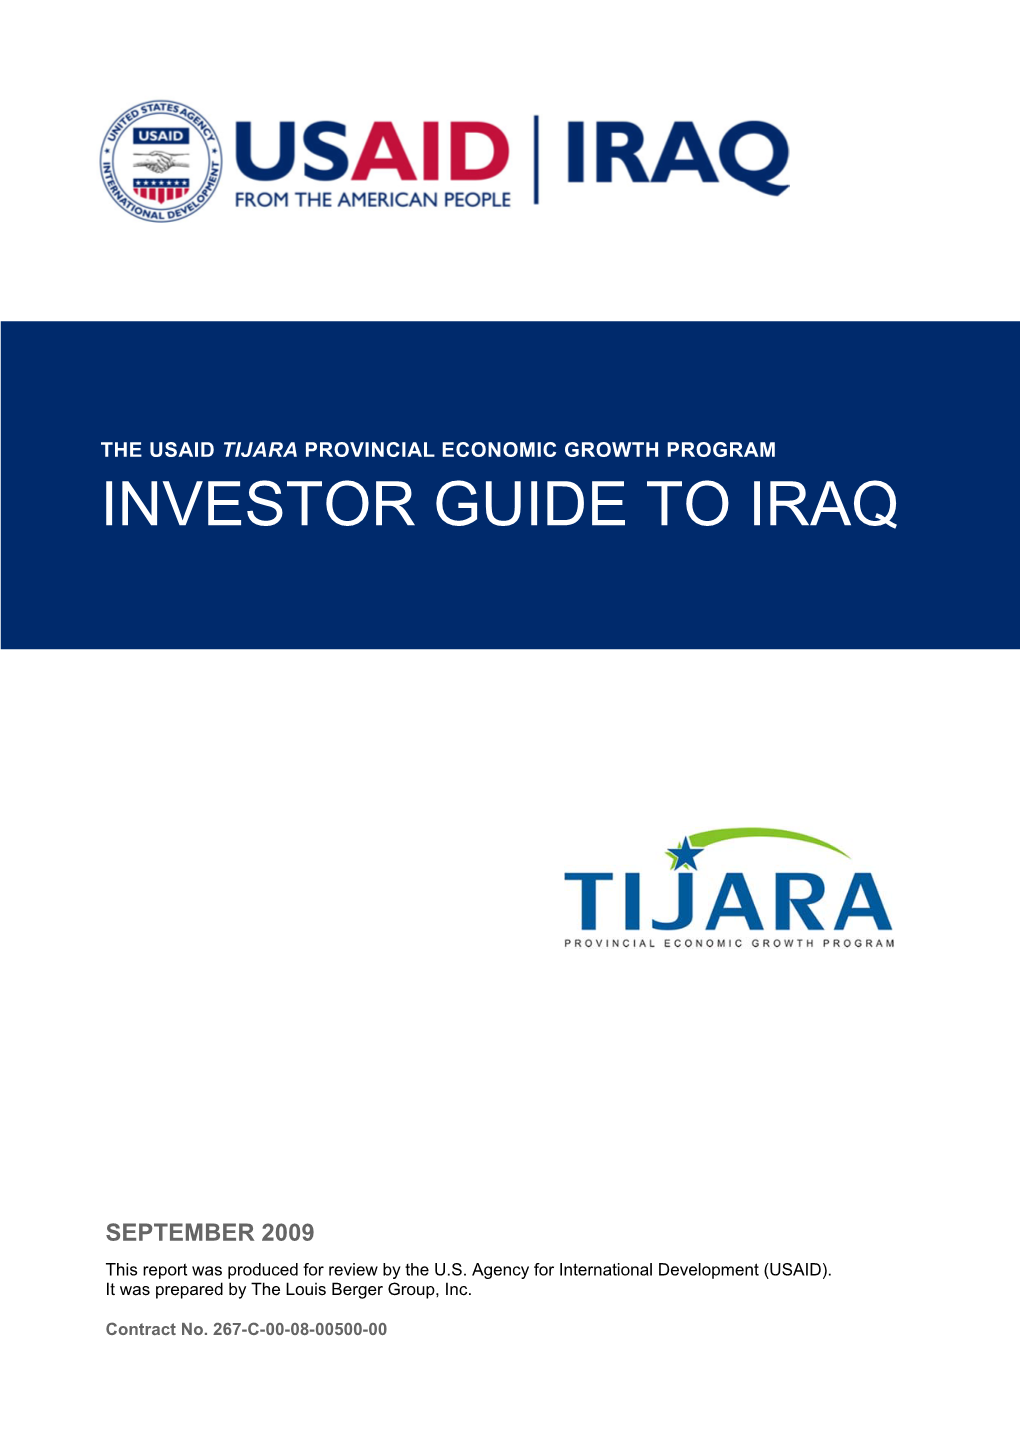 Investor Guide to Iraq